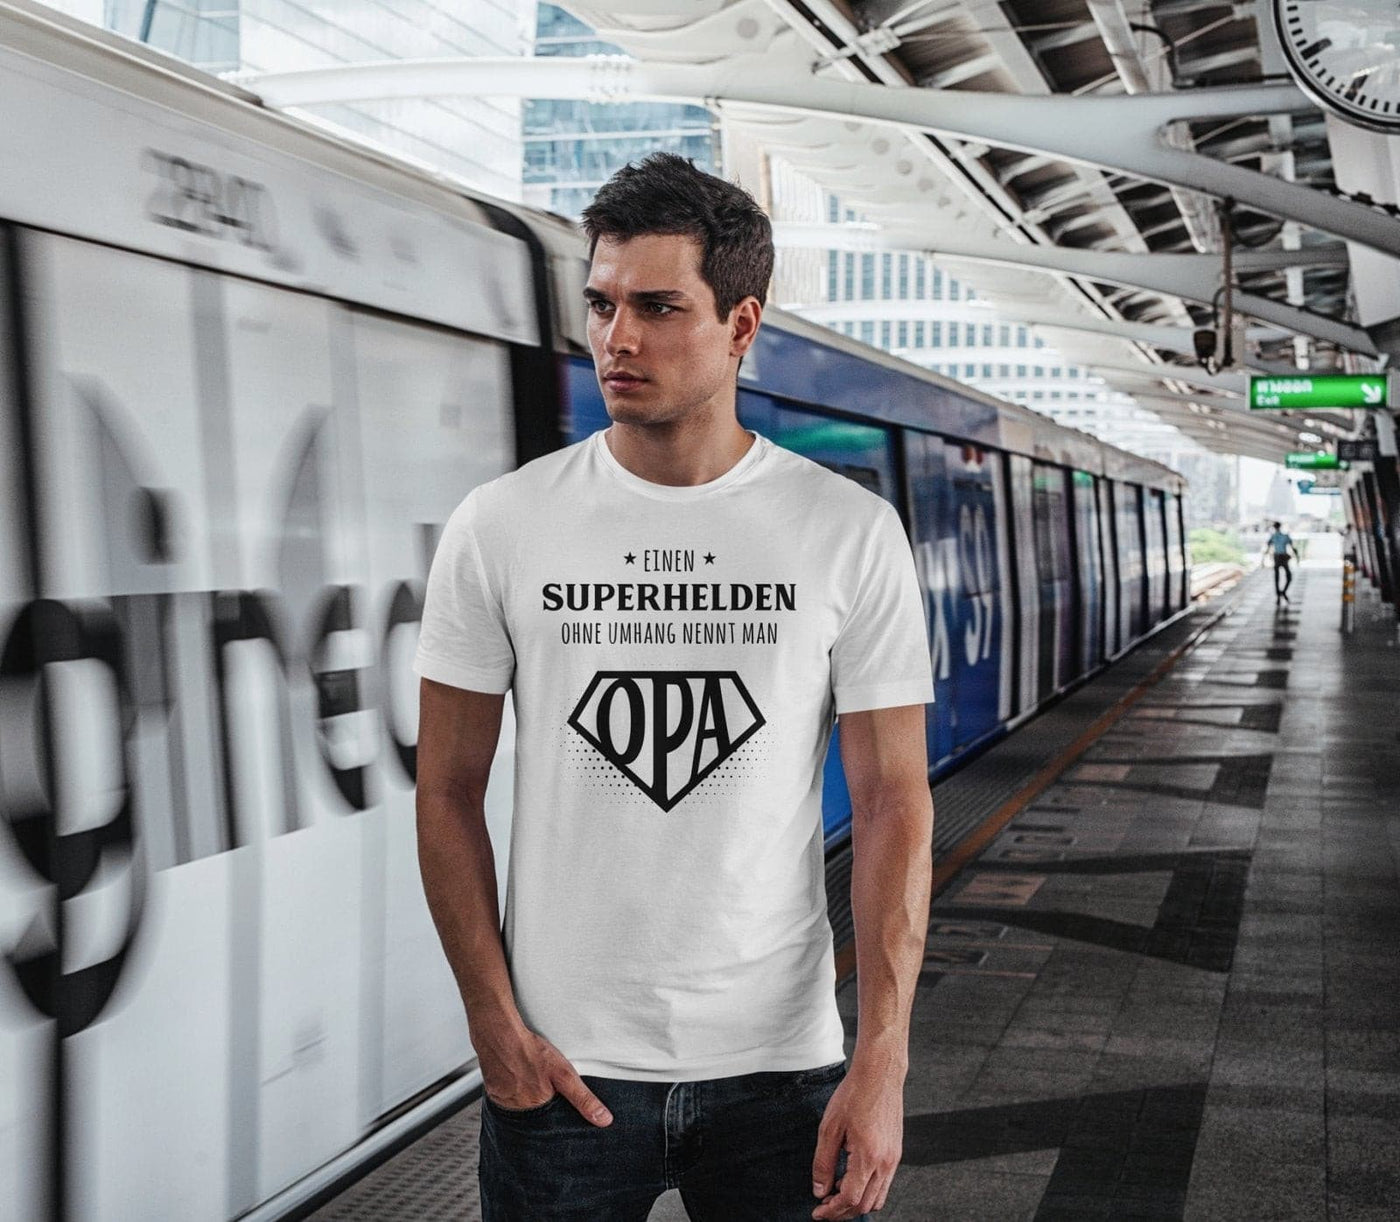 Bild: T-Shirt Herren - Einen Superhelden ohne Umhang nennt man Opa Geschenkidee